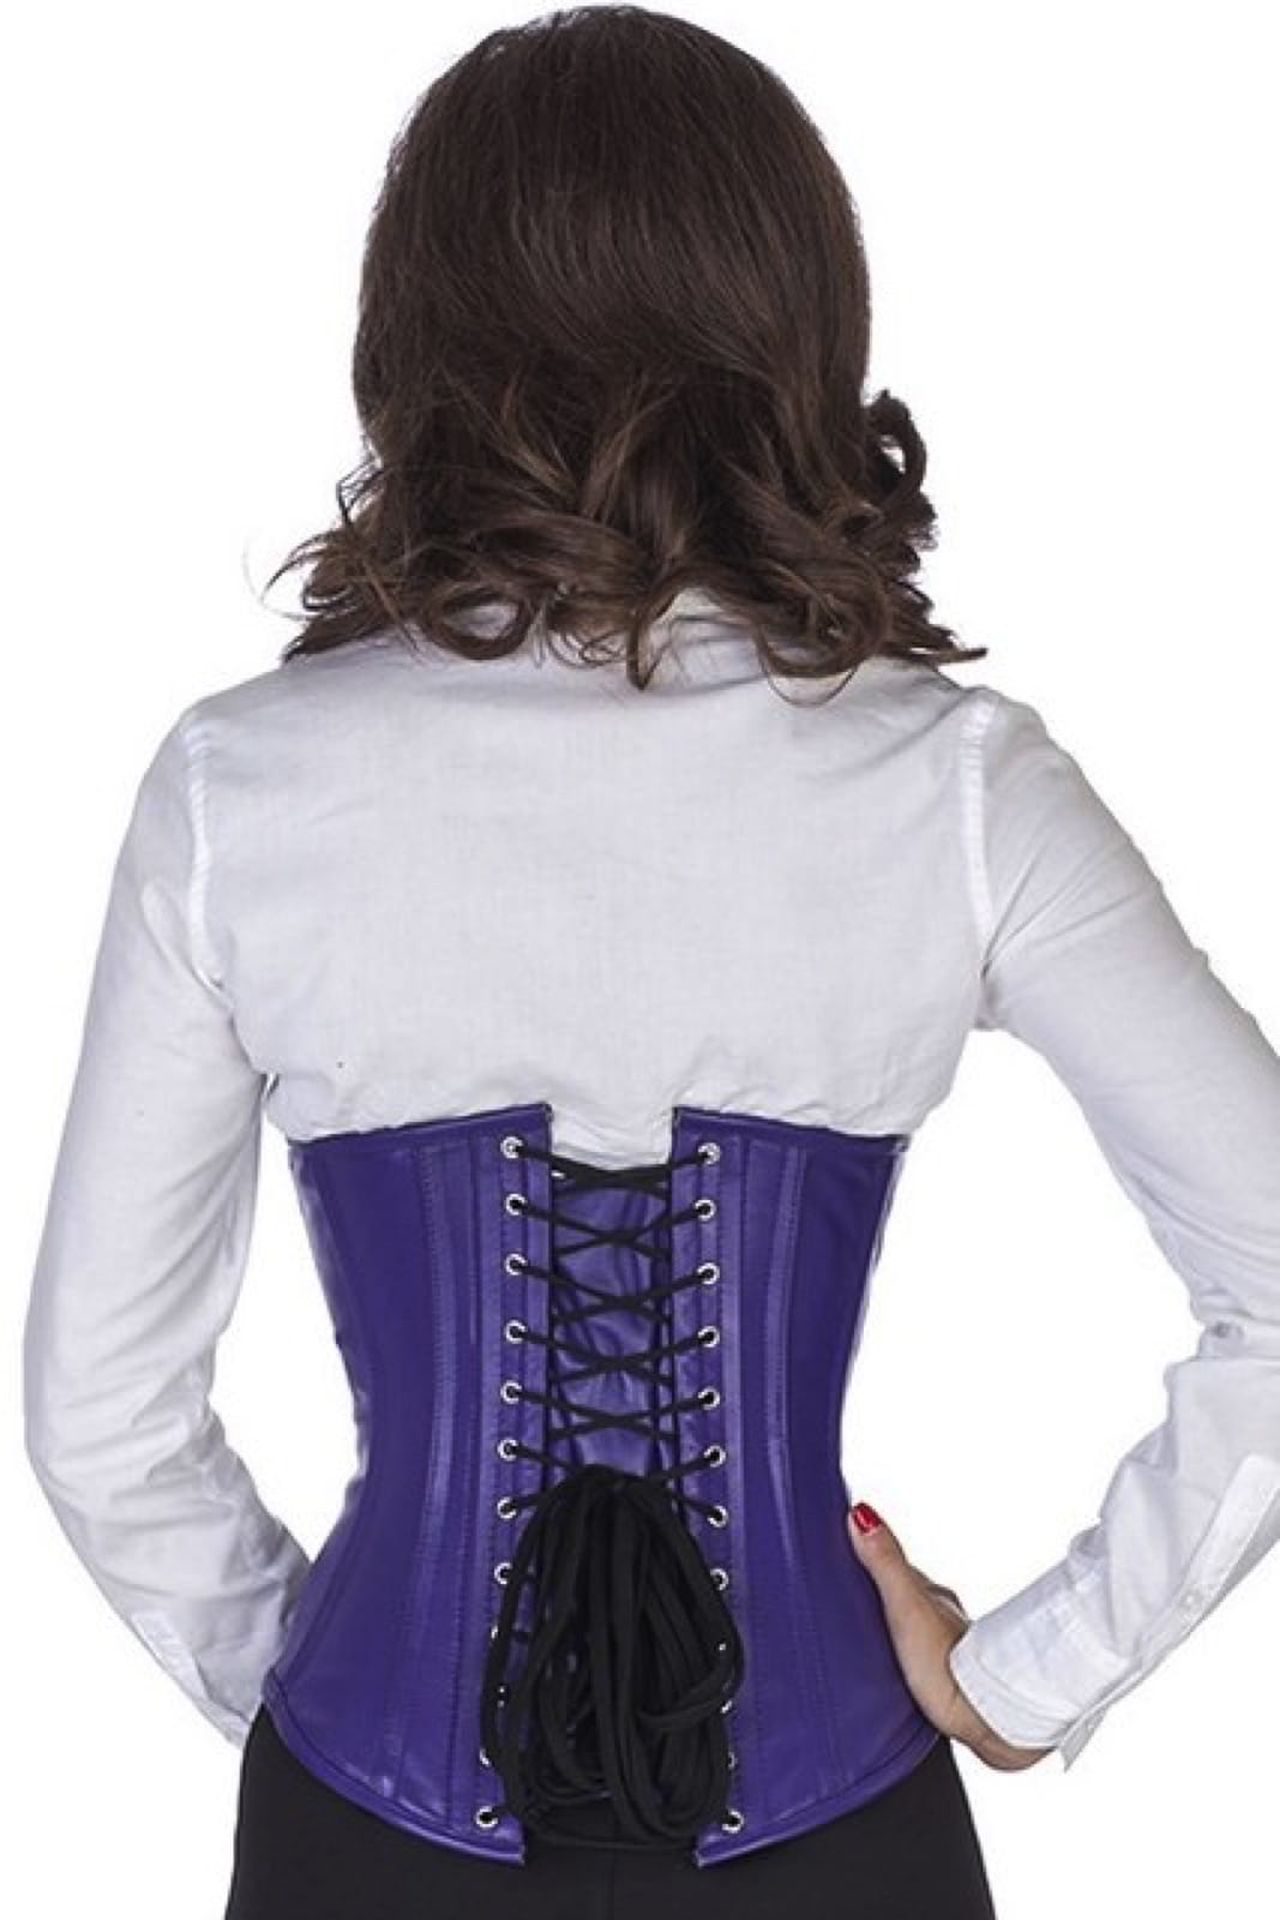 Corse violeta cuero bajo pecho corset lu32